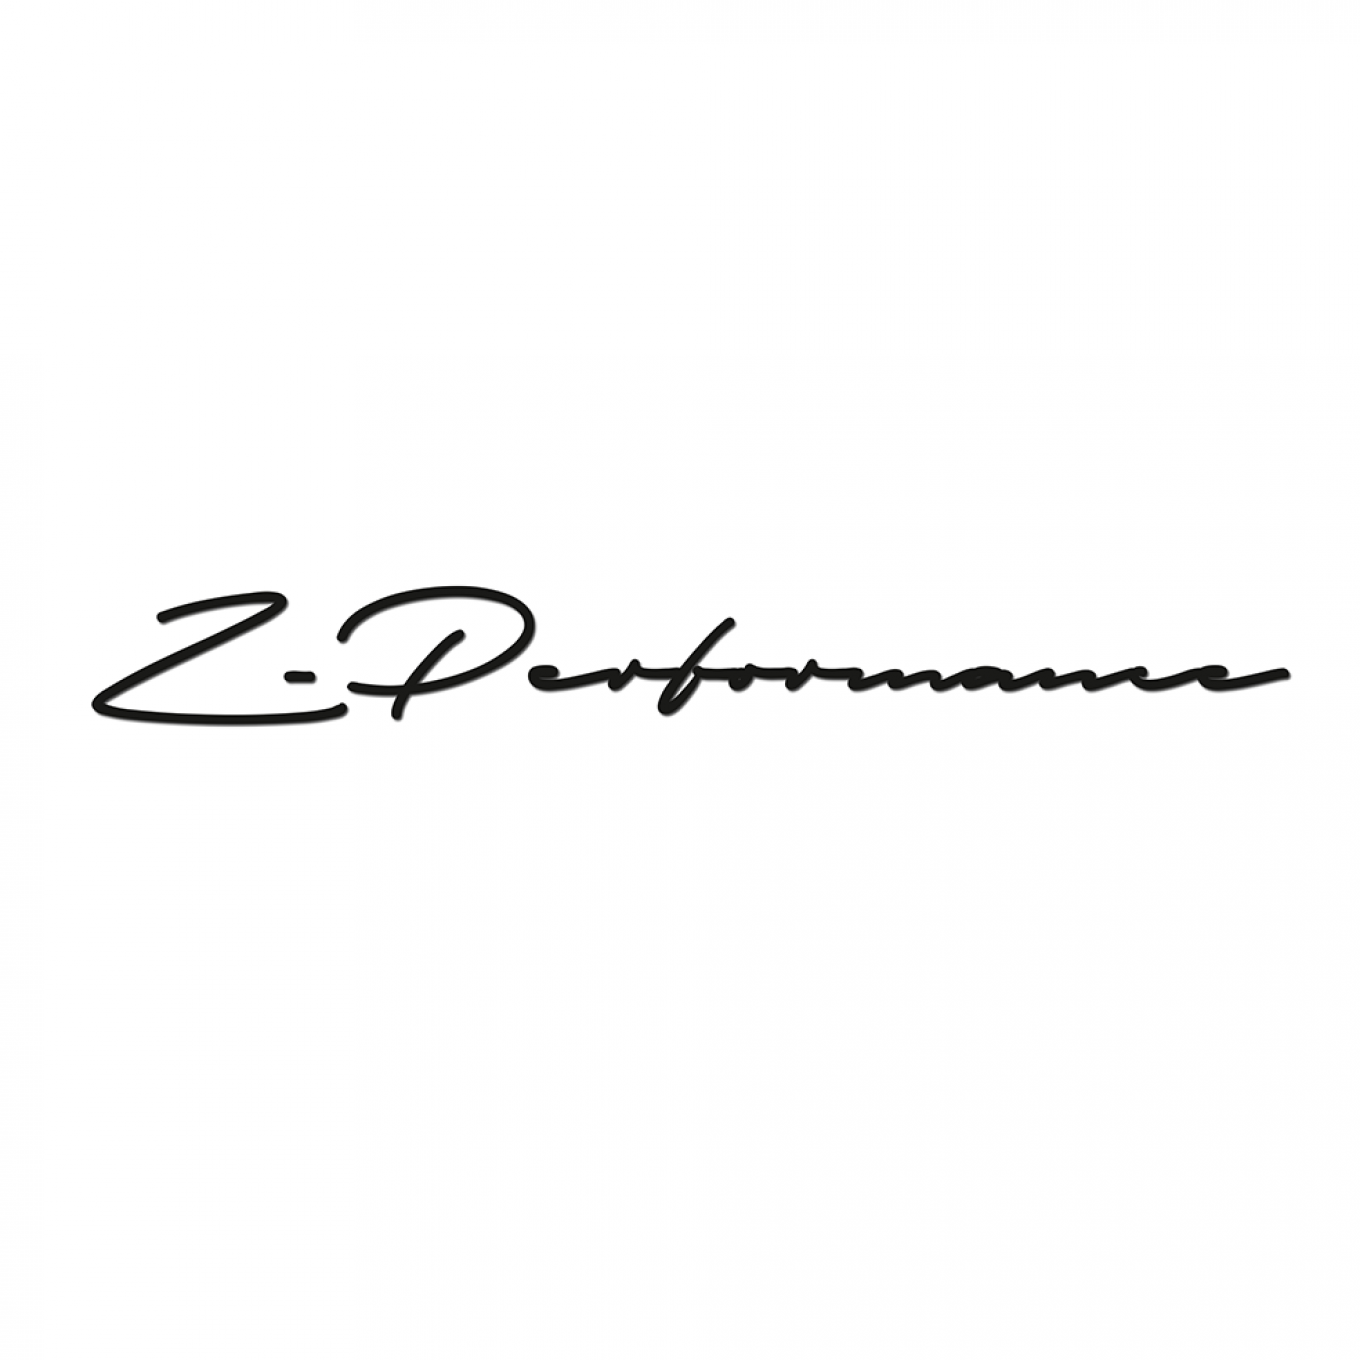 Z-Performance Signature Sticker | 55 cm | Weiss